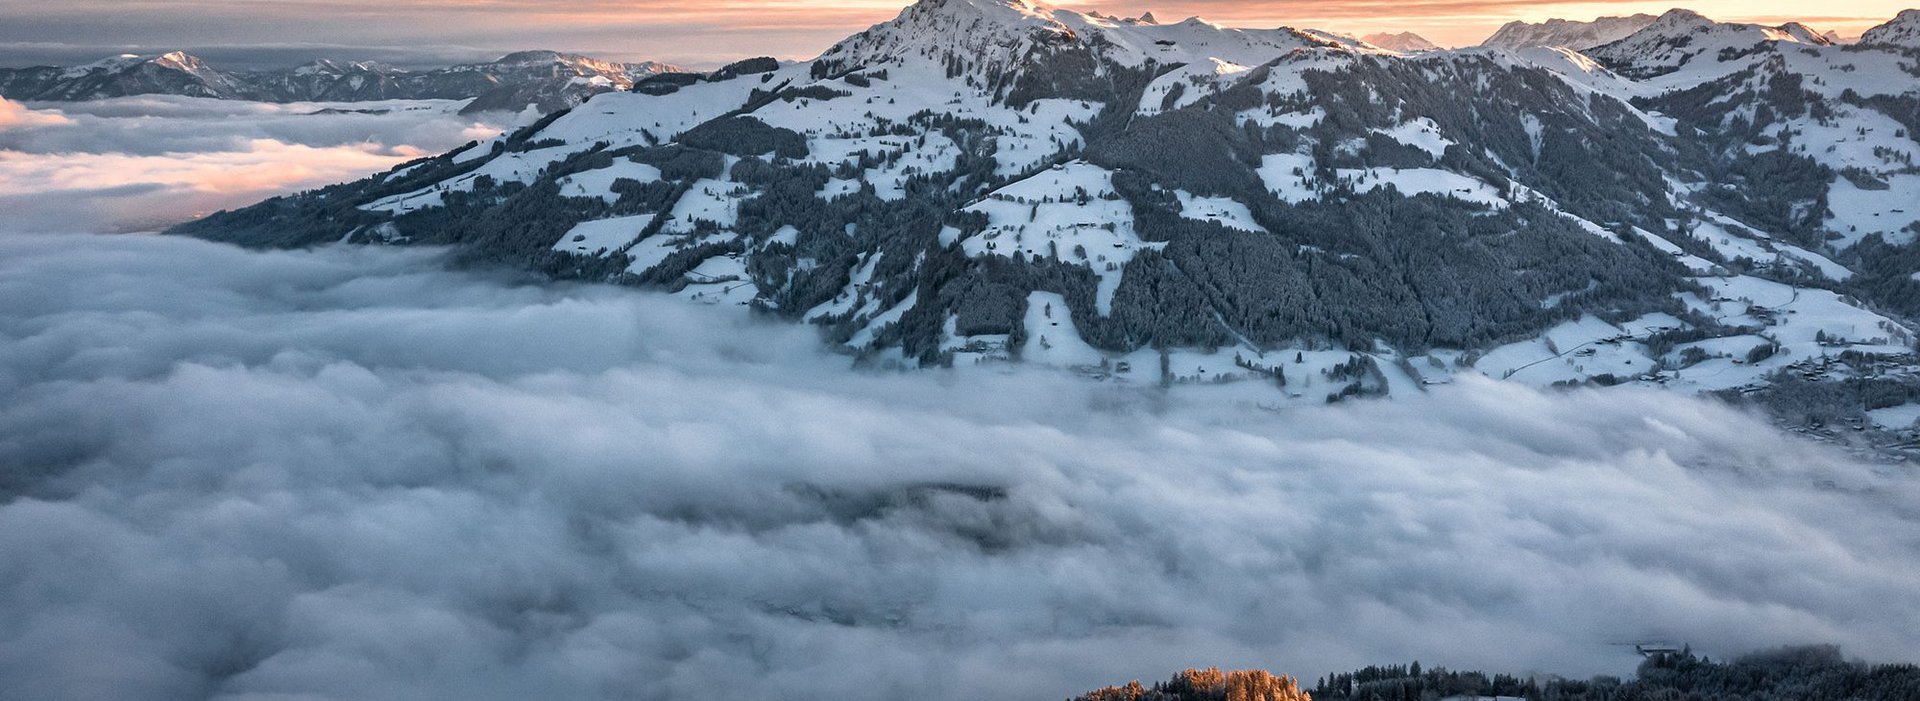 Kitzbühel Mountain Landscape